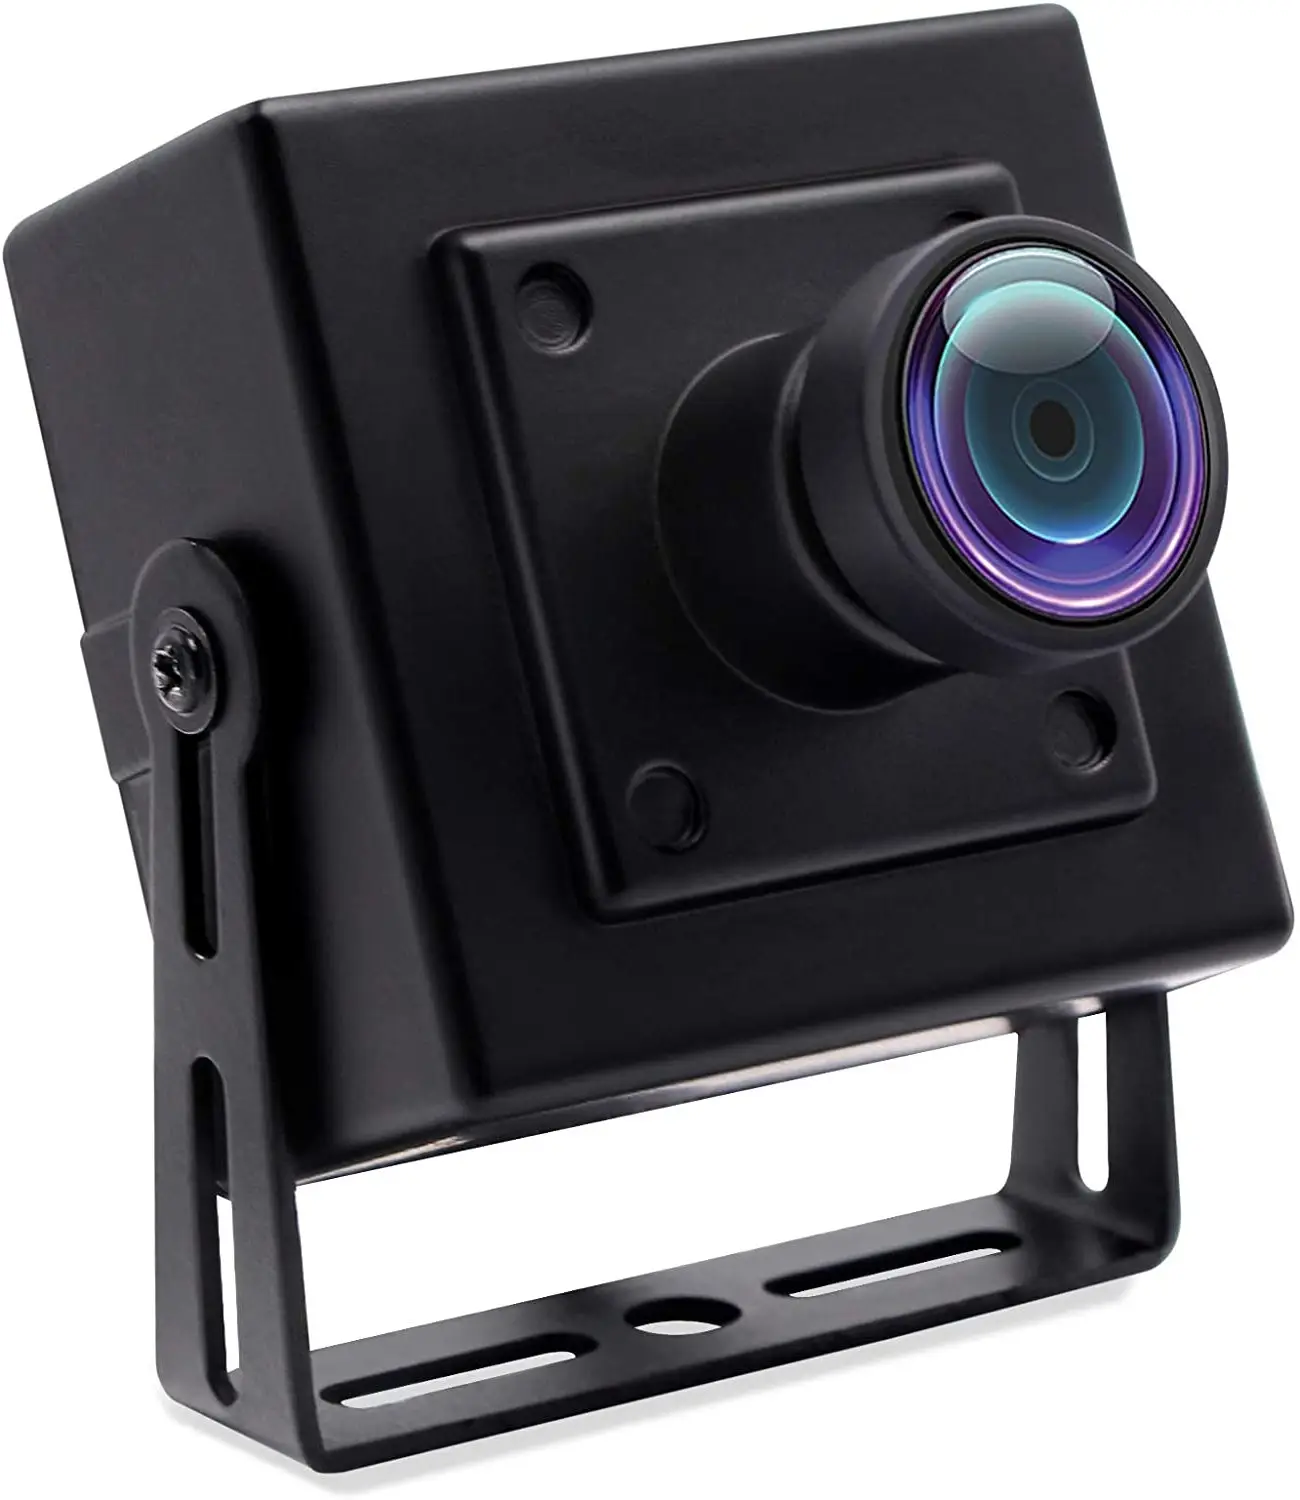 ELP 170 degree 1080p fisheye lens wide angle mini USB 2.0 webcam camera usb for attendance machine, Virtual pinball Game machine